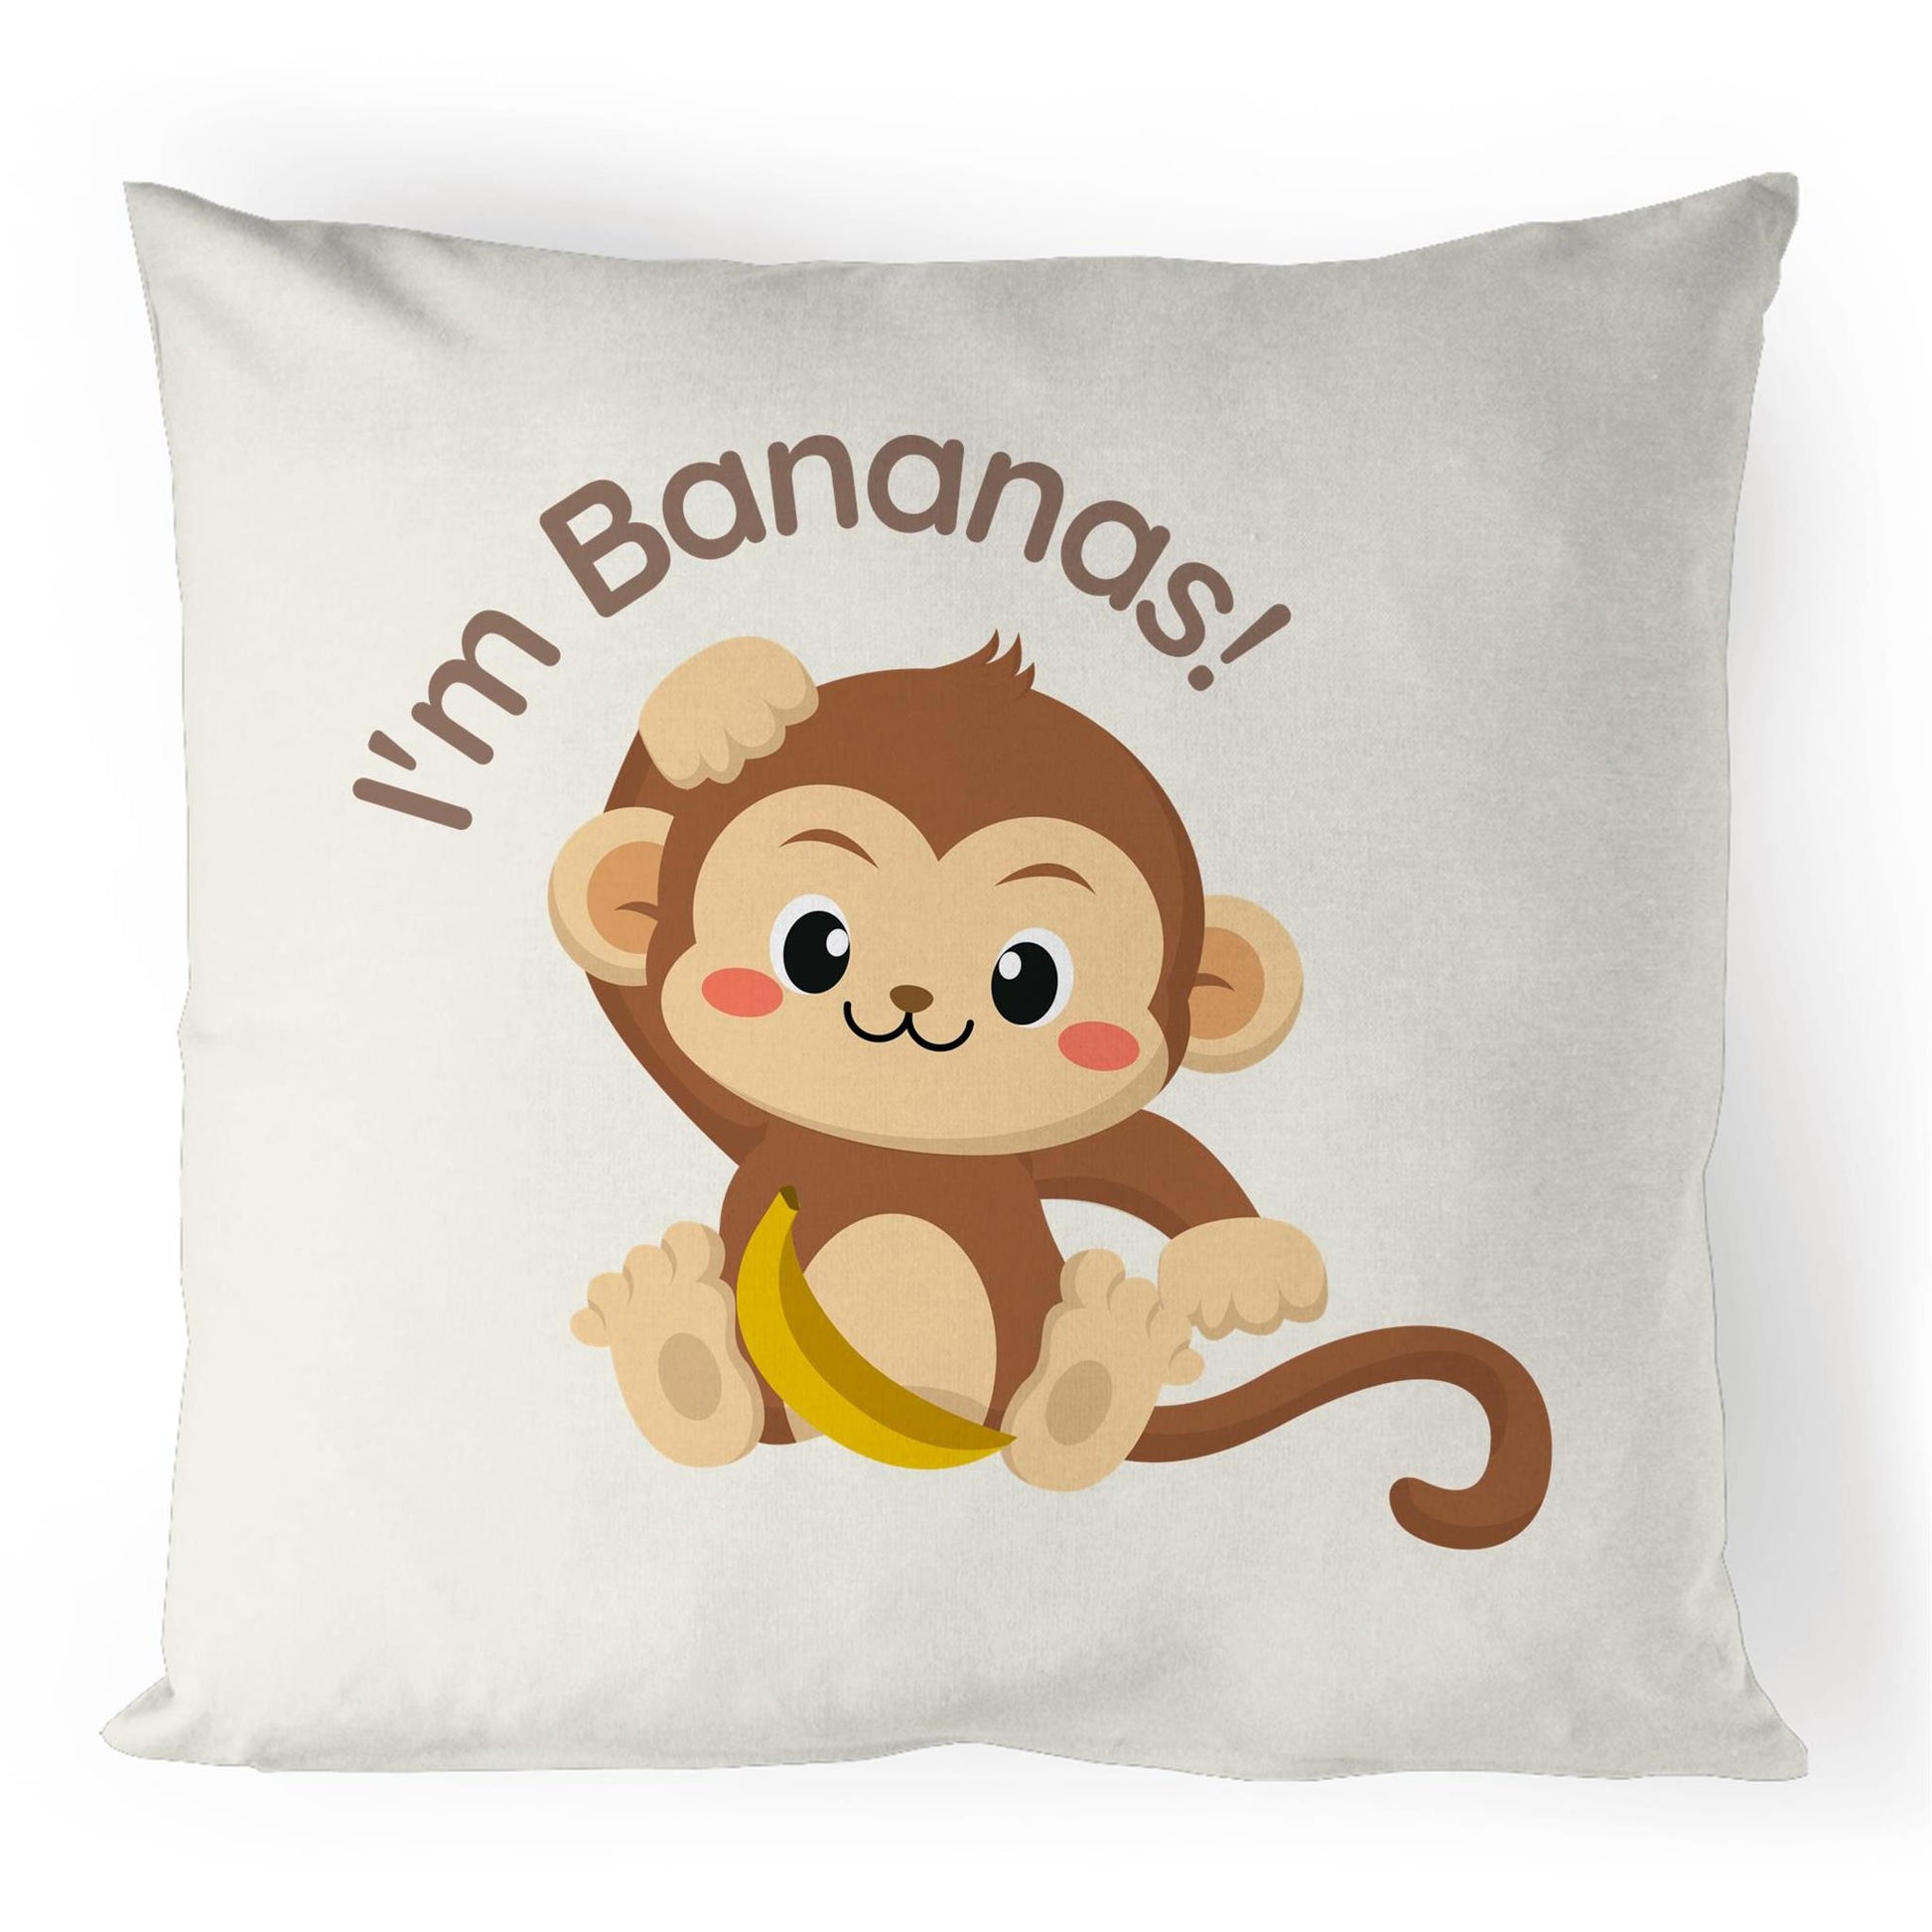 I'm Bananas - 100% Linen Cushion Cover Default Title Linen Cushion Cover